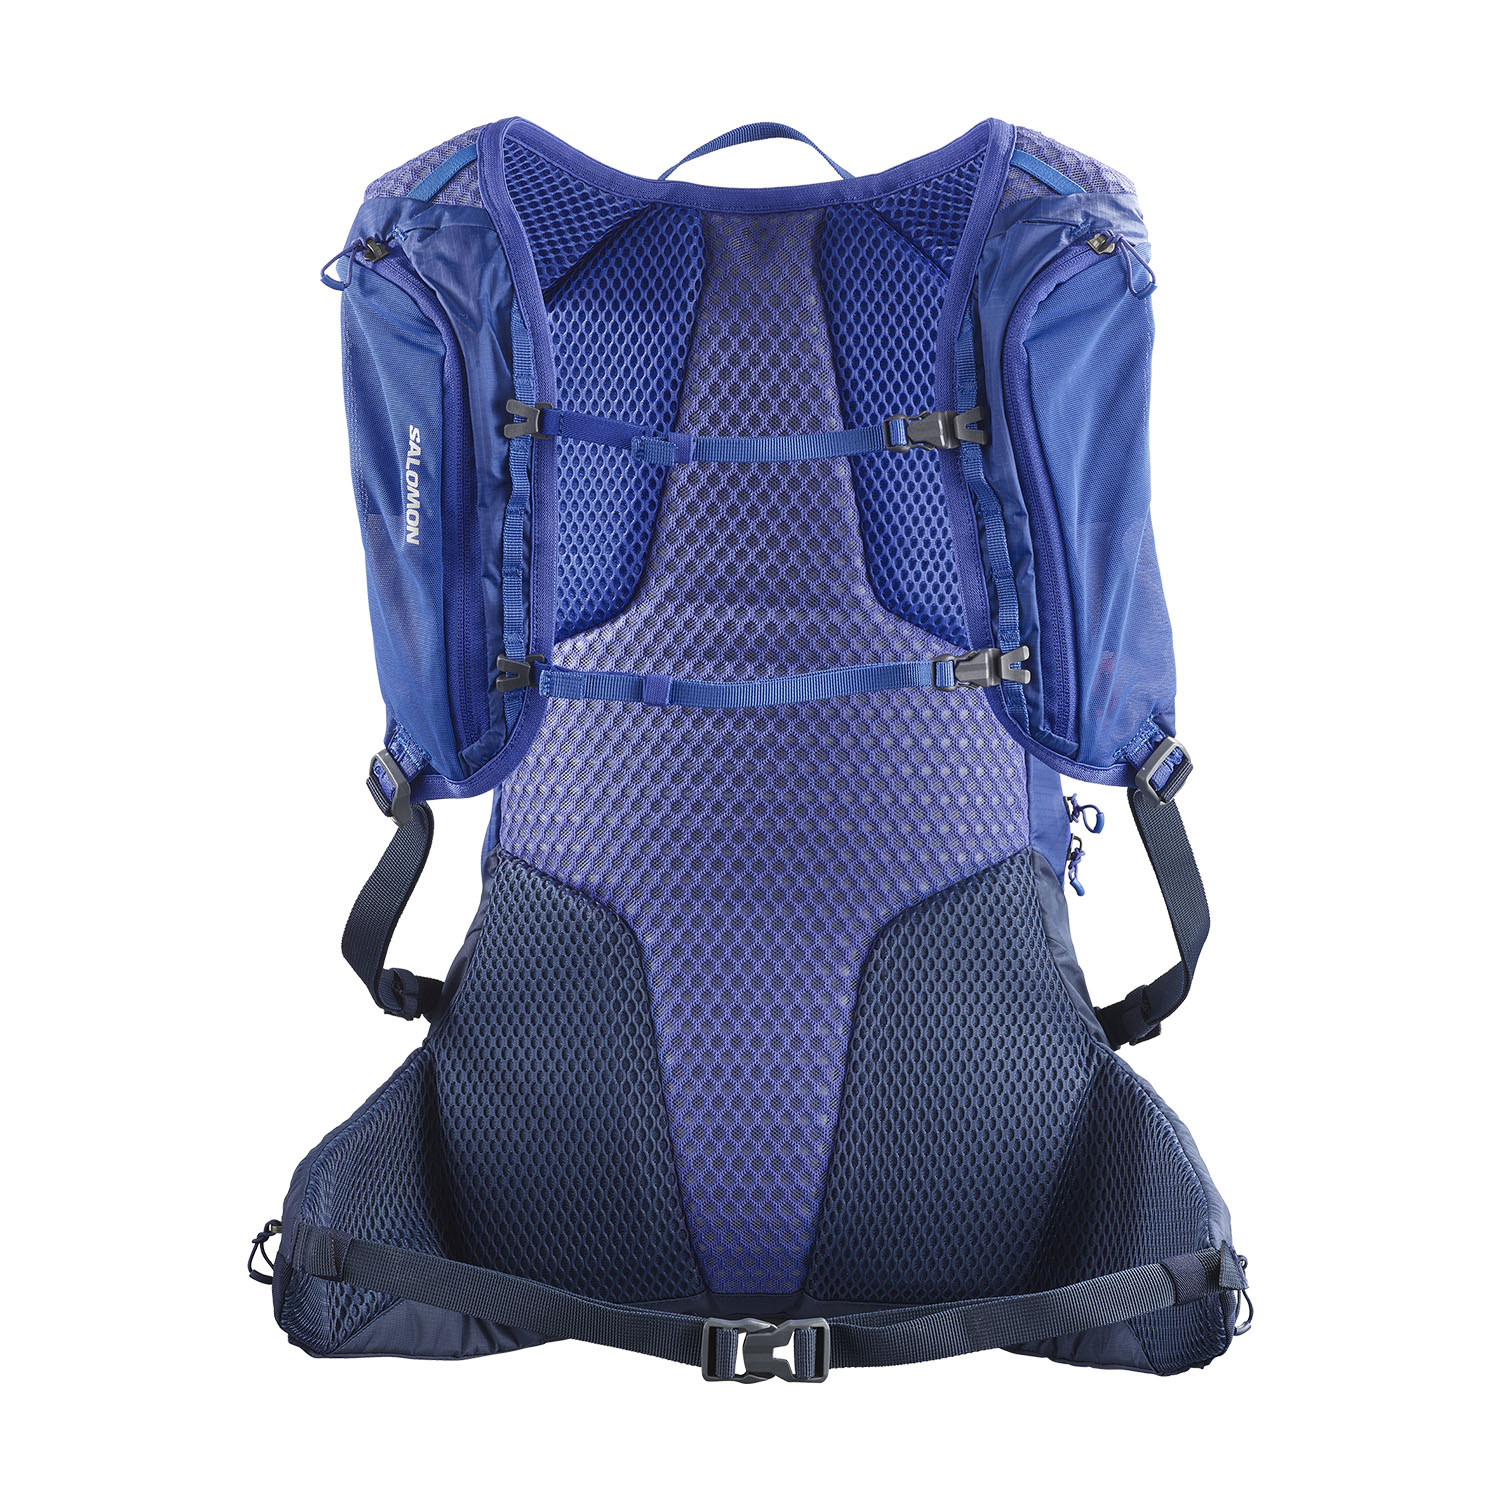 Salomon XT 20 Outdoor Backpack - Surf The Web/Black